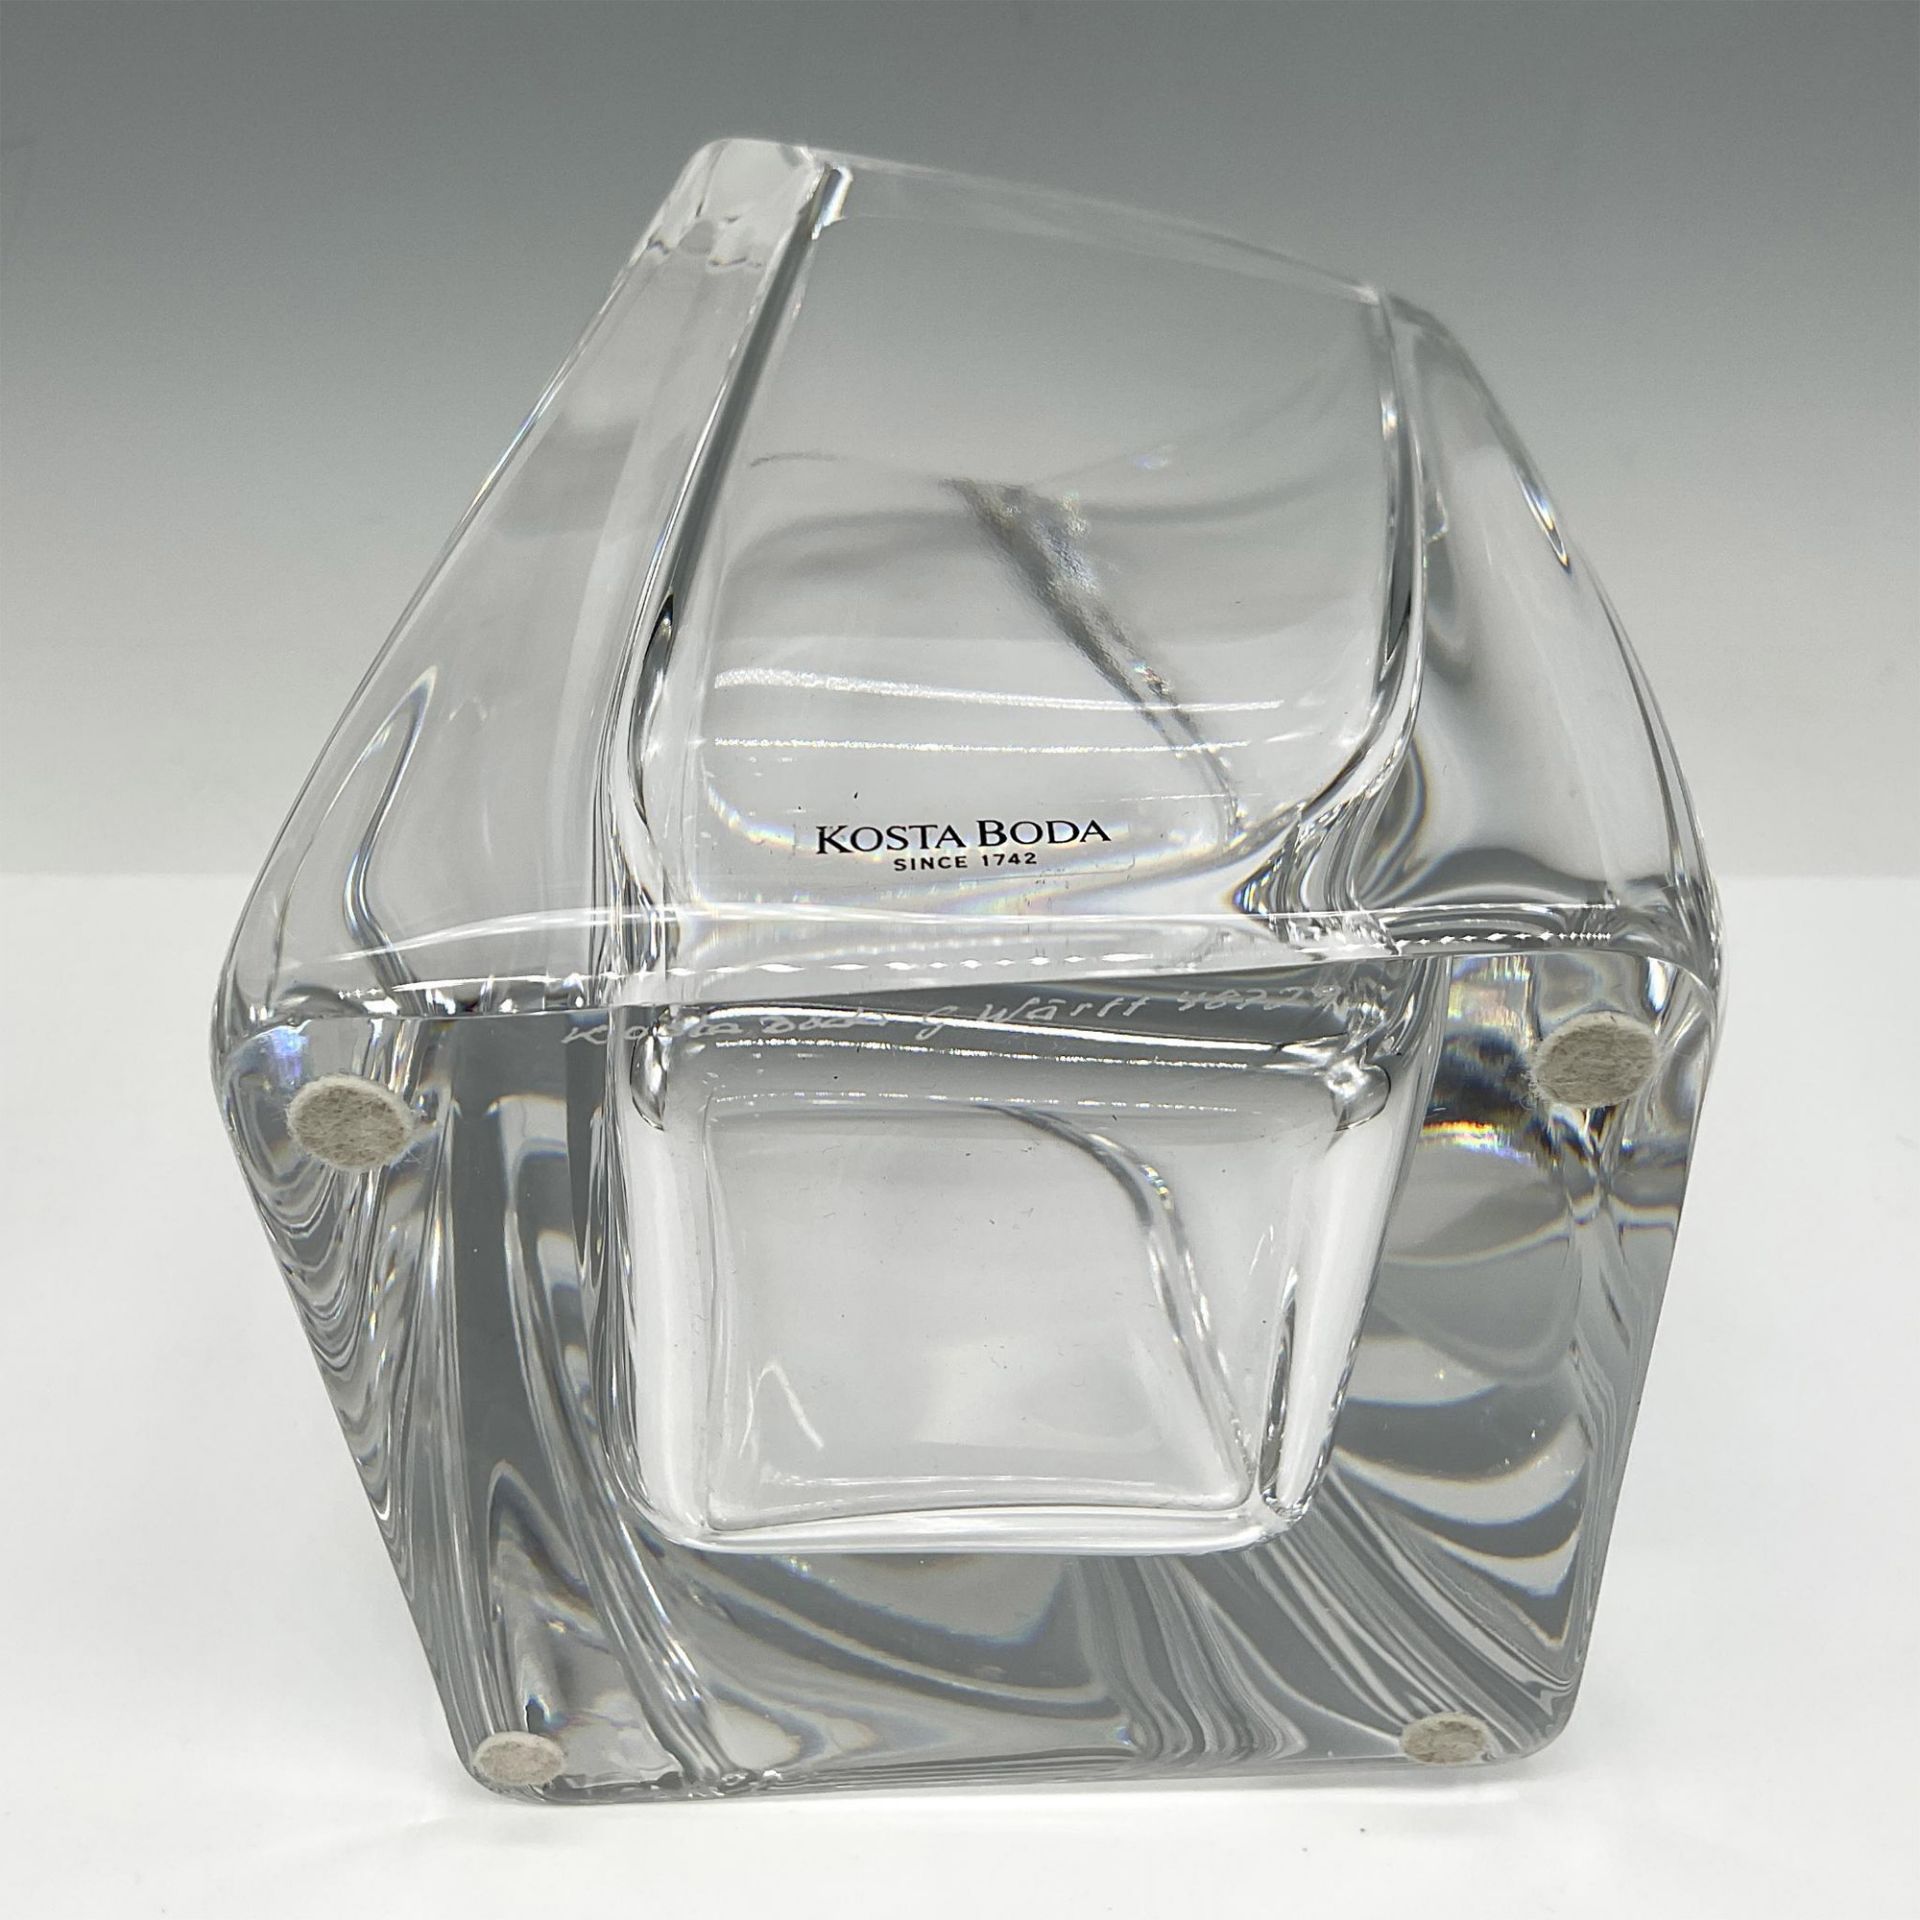 Goran Warff for Kosta Boda Crystal Vase - Image 4 of 4